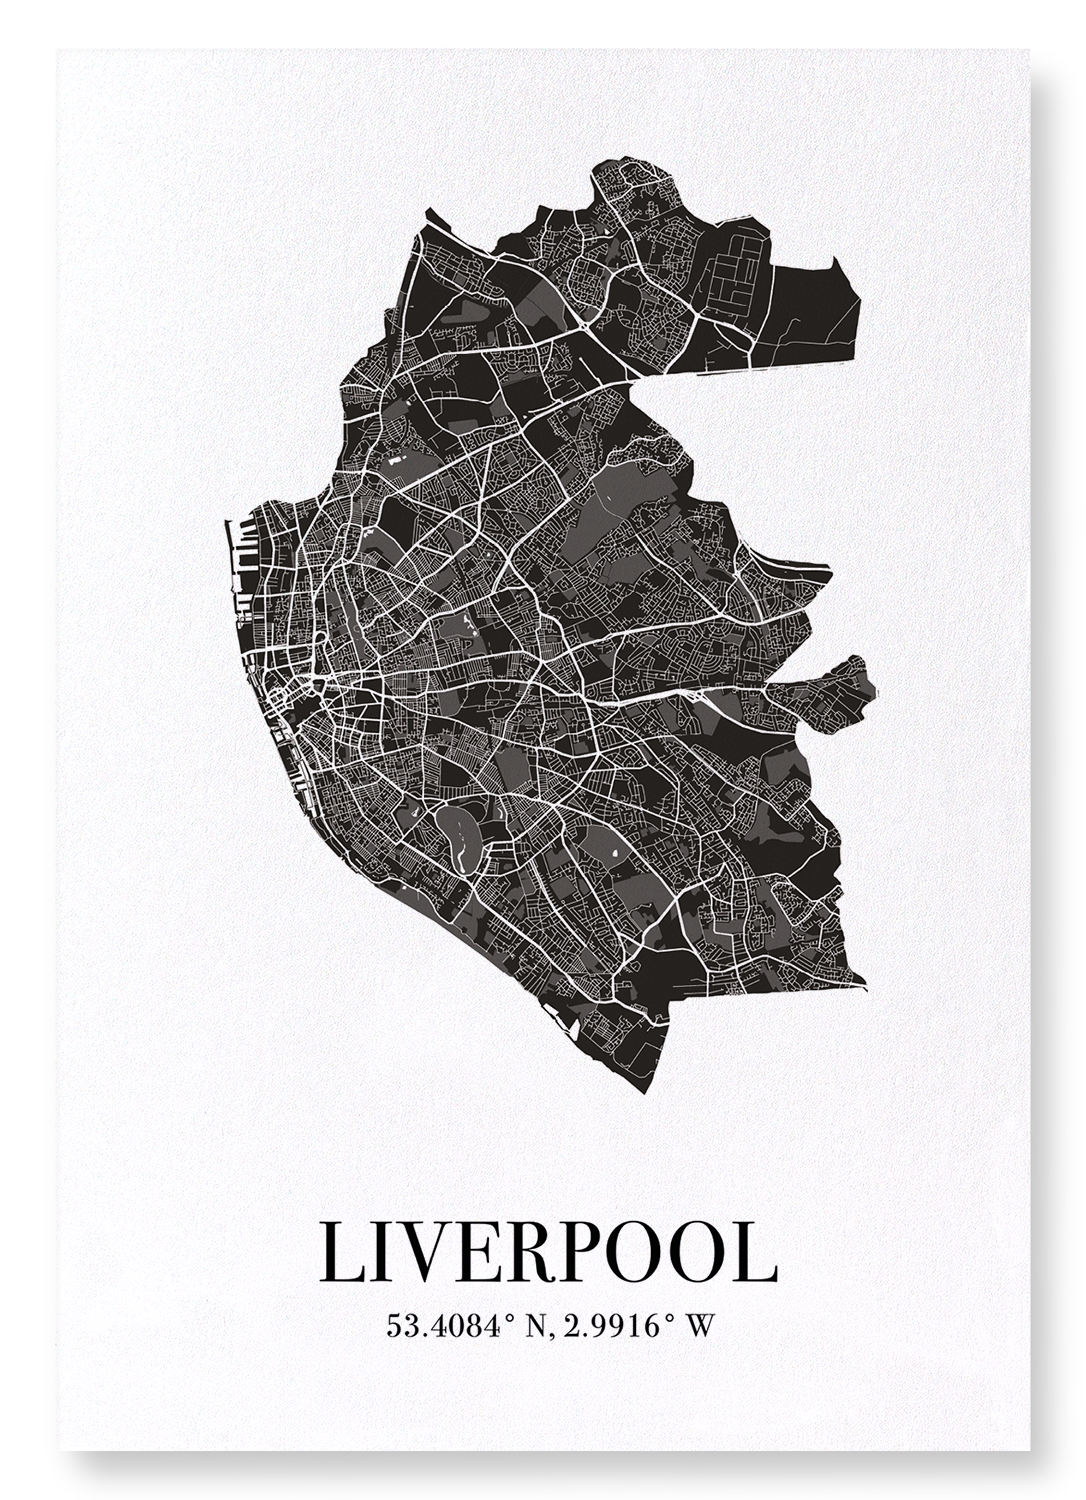 LIVERPOOL CUTOUT: Map Cutout Art Print